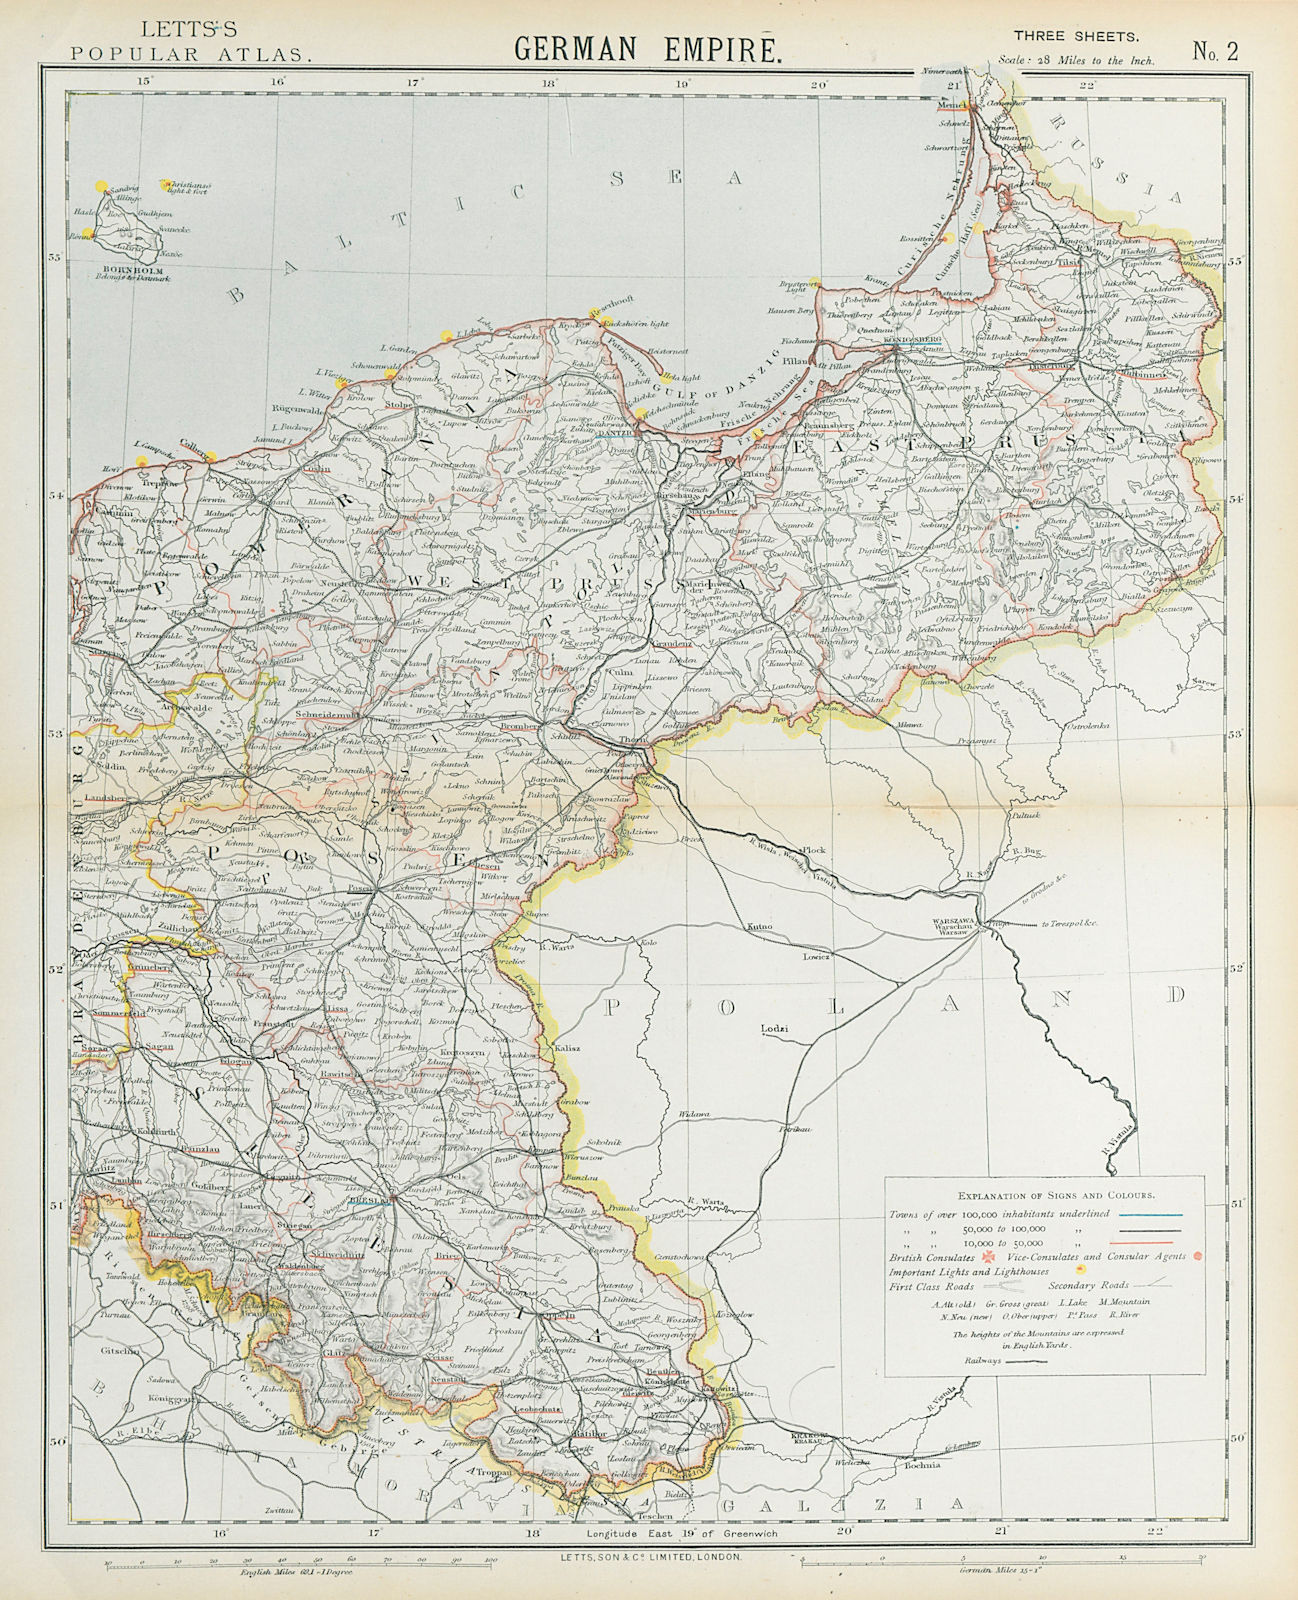 Associate Product EAST GERMAN EMPIRE. Prussia Poland Posen Silesia Pomerania. LETTS 1883 old map